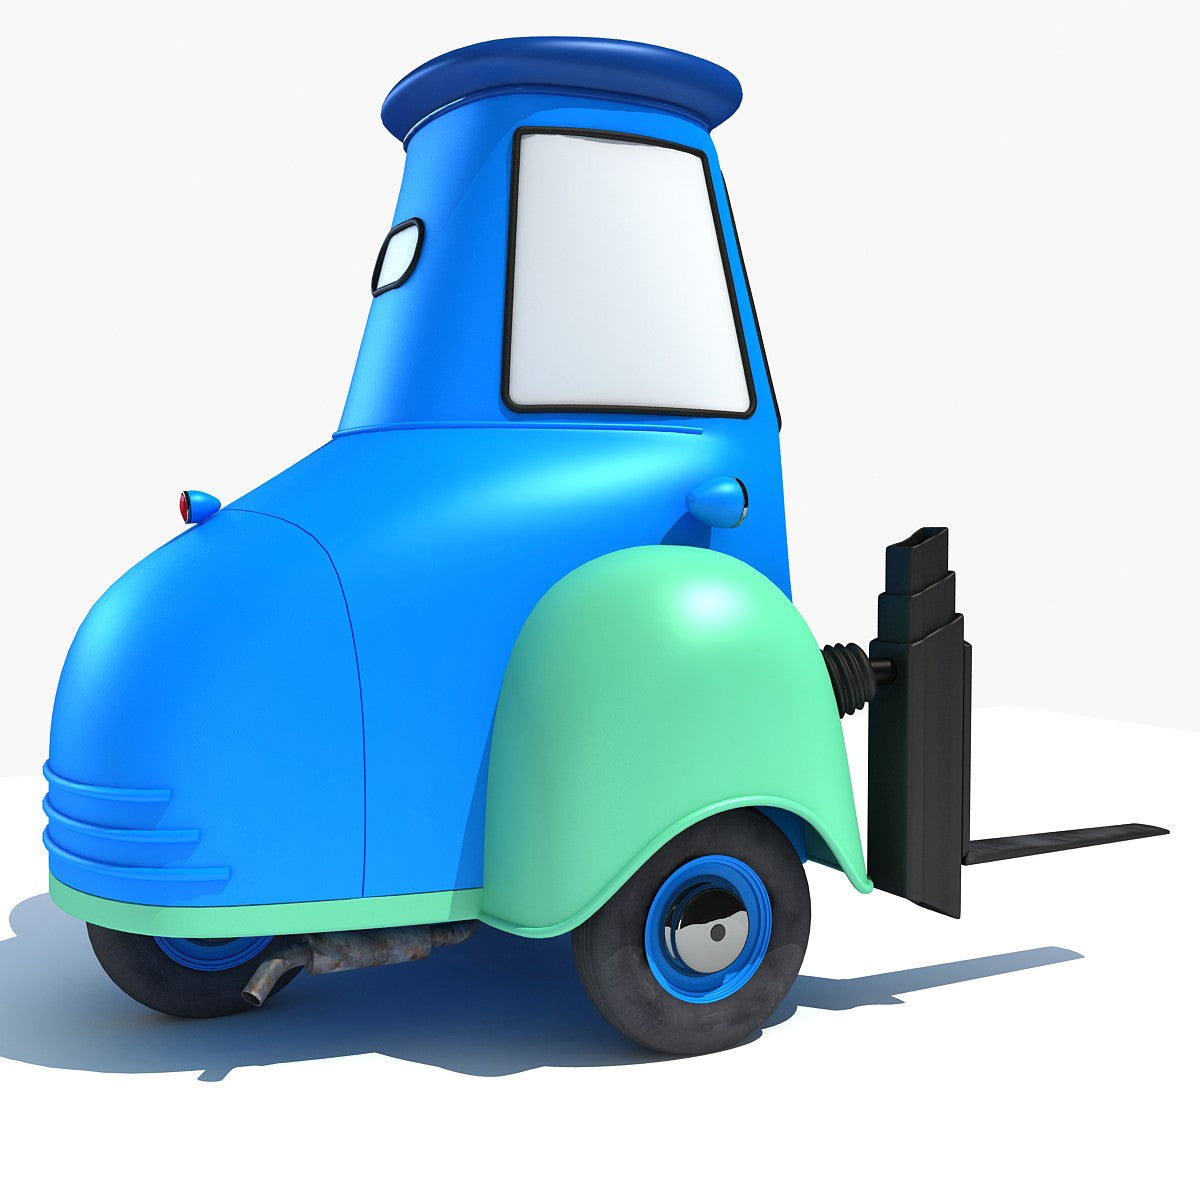 3D Cartoon Disney Cars Models